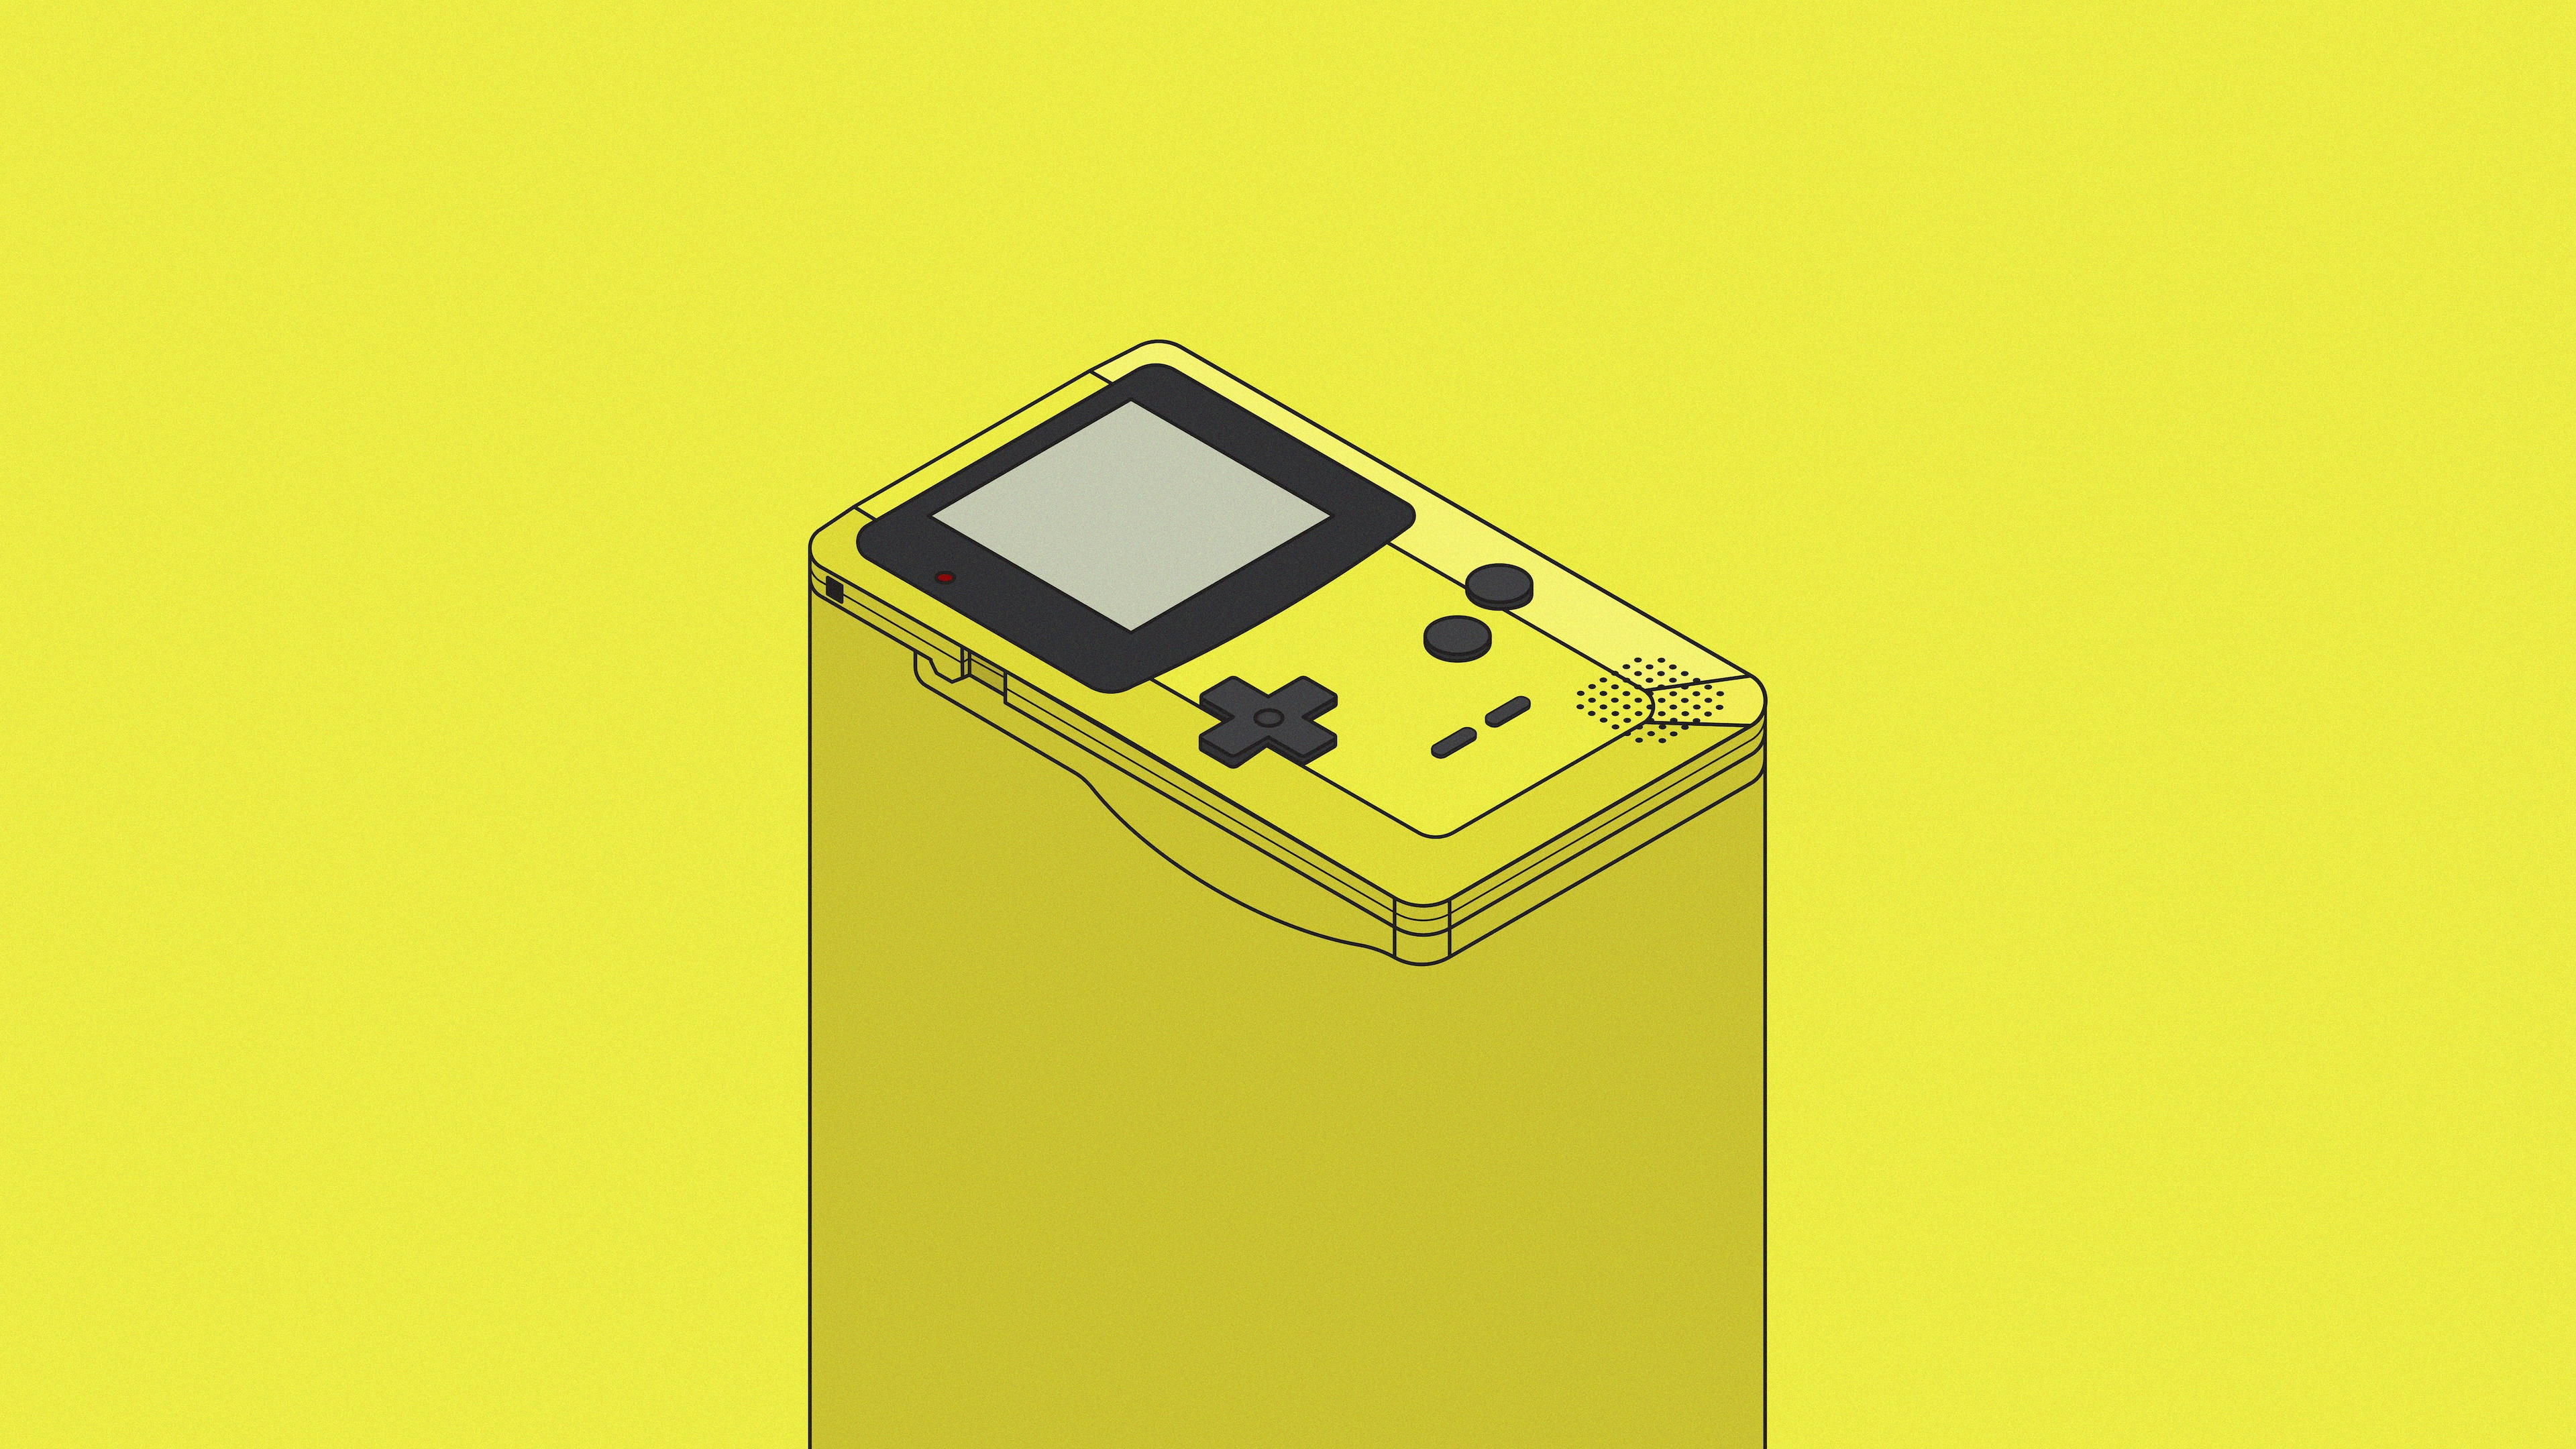 General 3840x2160 digital art artwork illustration minimalism Nintendo GameBoy Color consoles shadow 4K simple background yellow yellow background